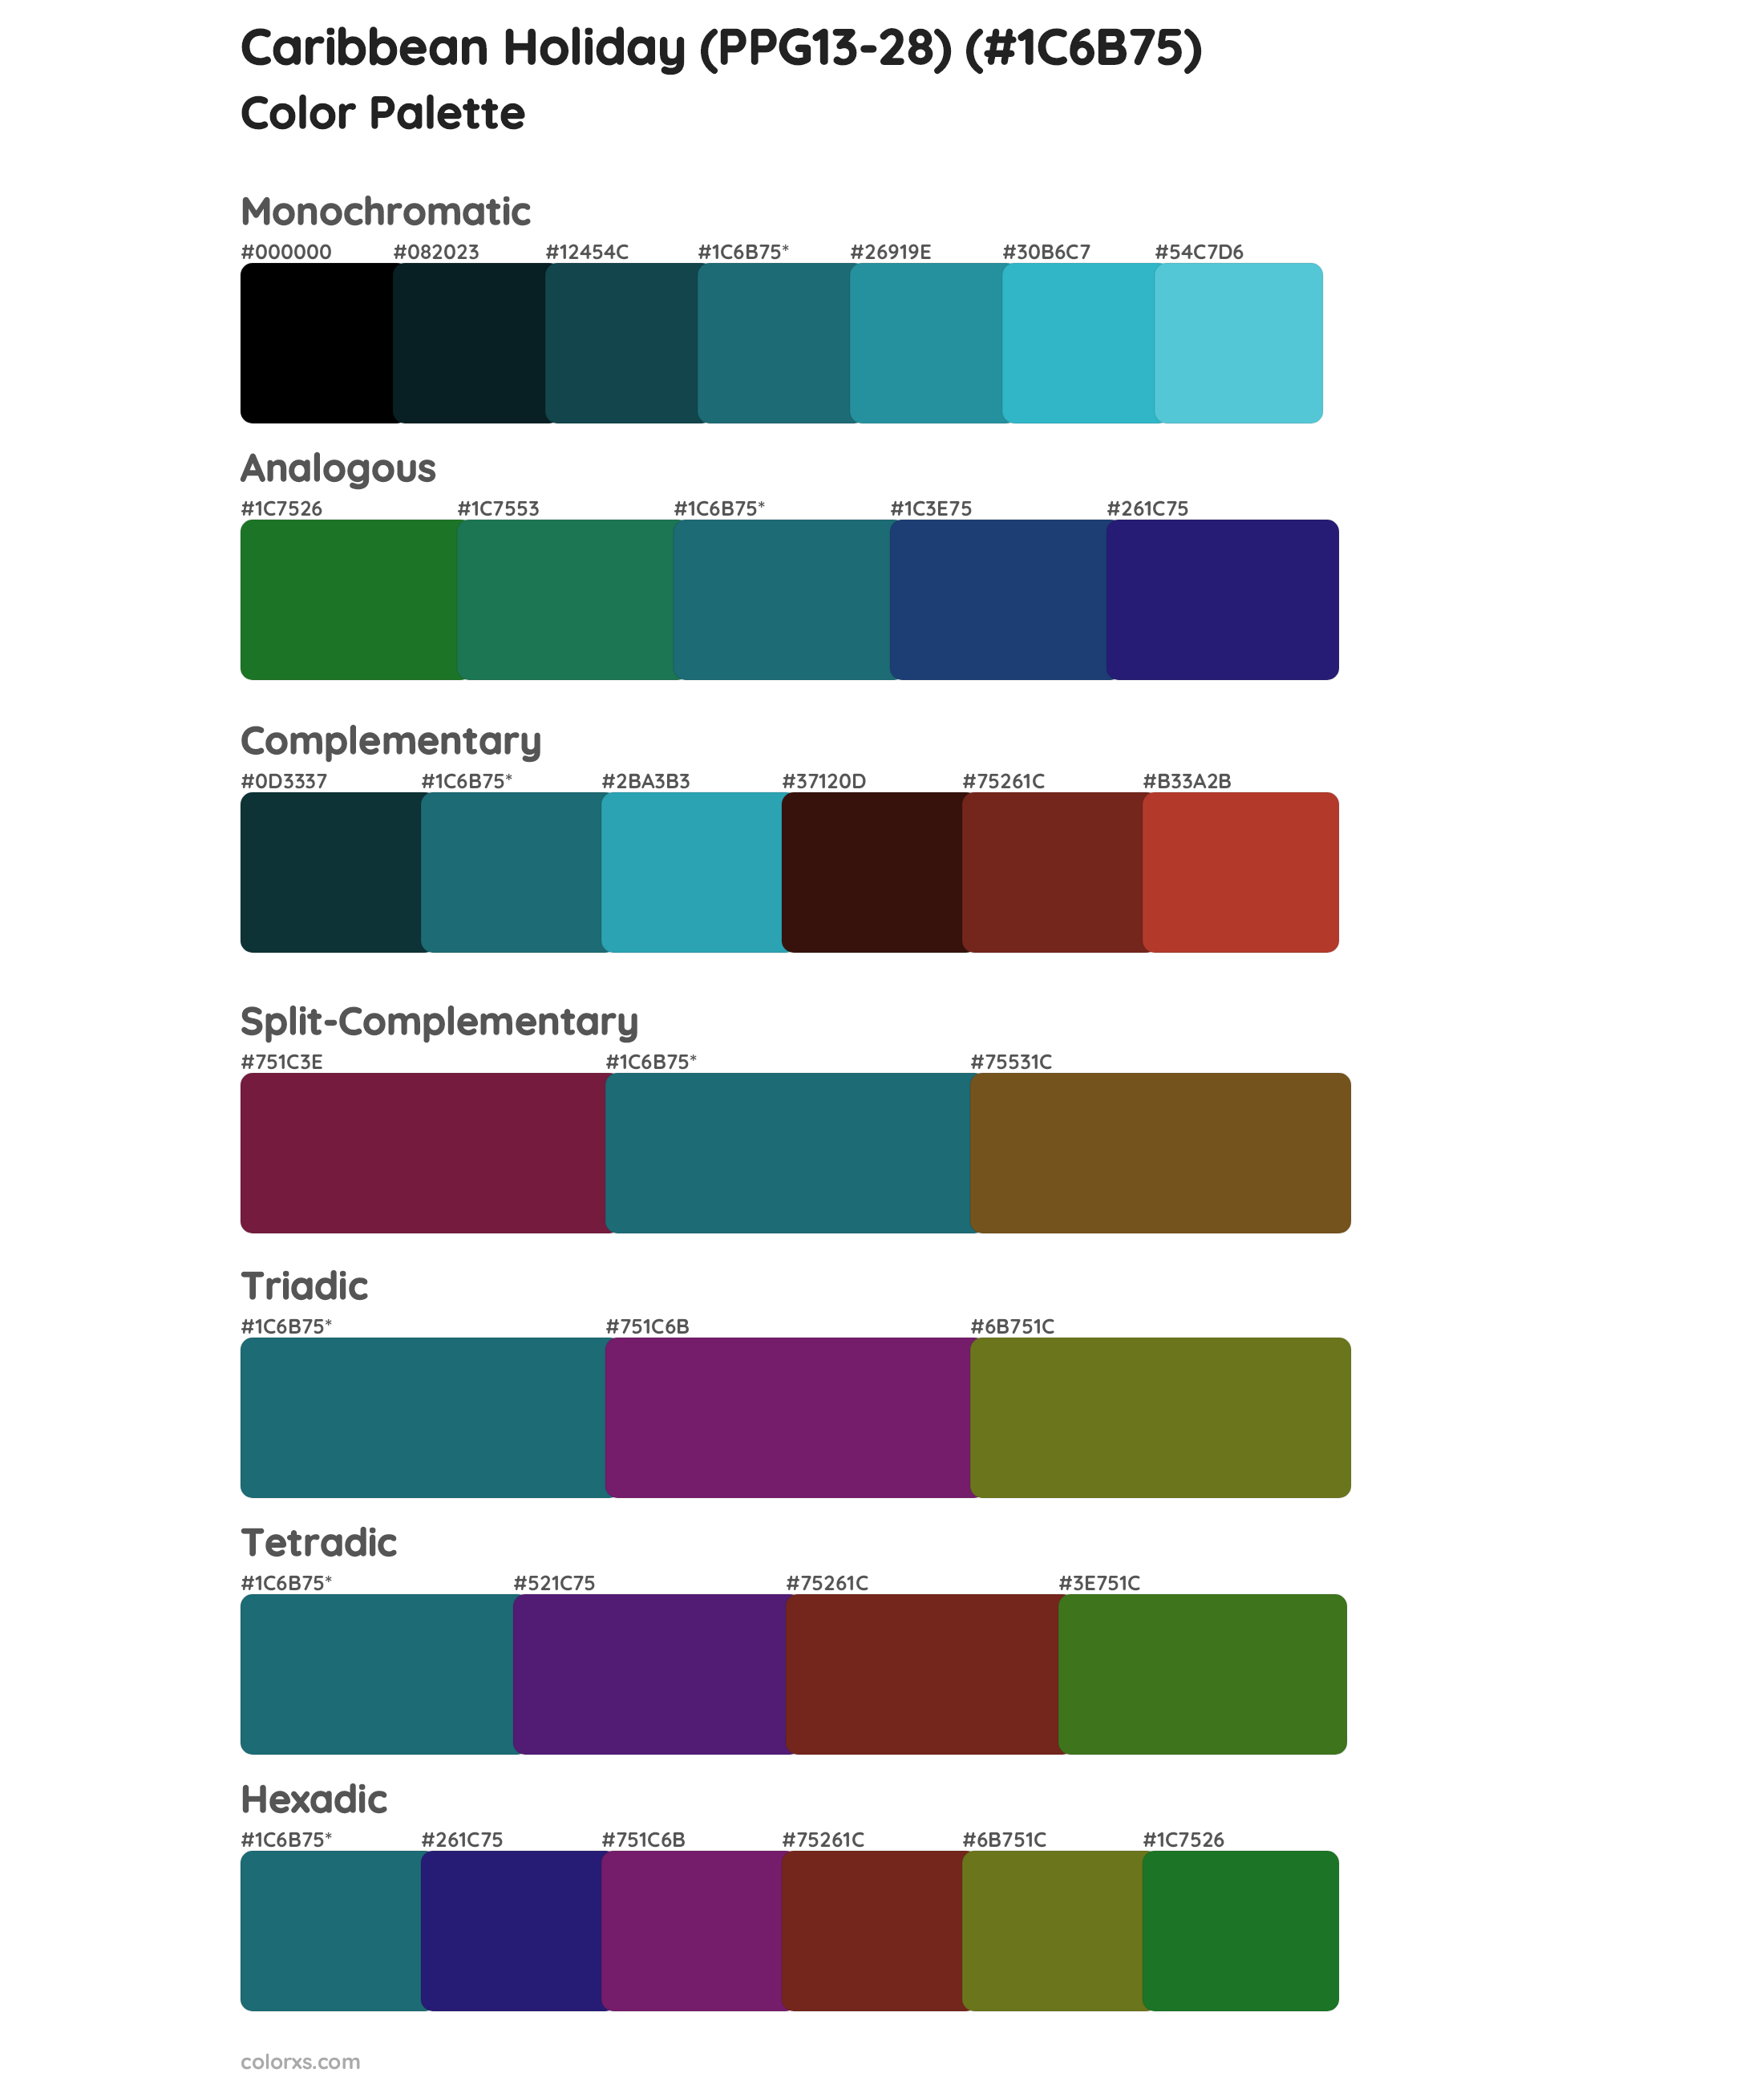 Caribbean Holiday (PPG13-28) Color Scheme Palettes